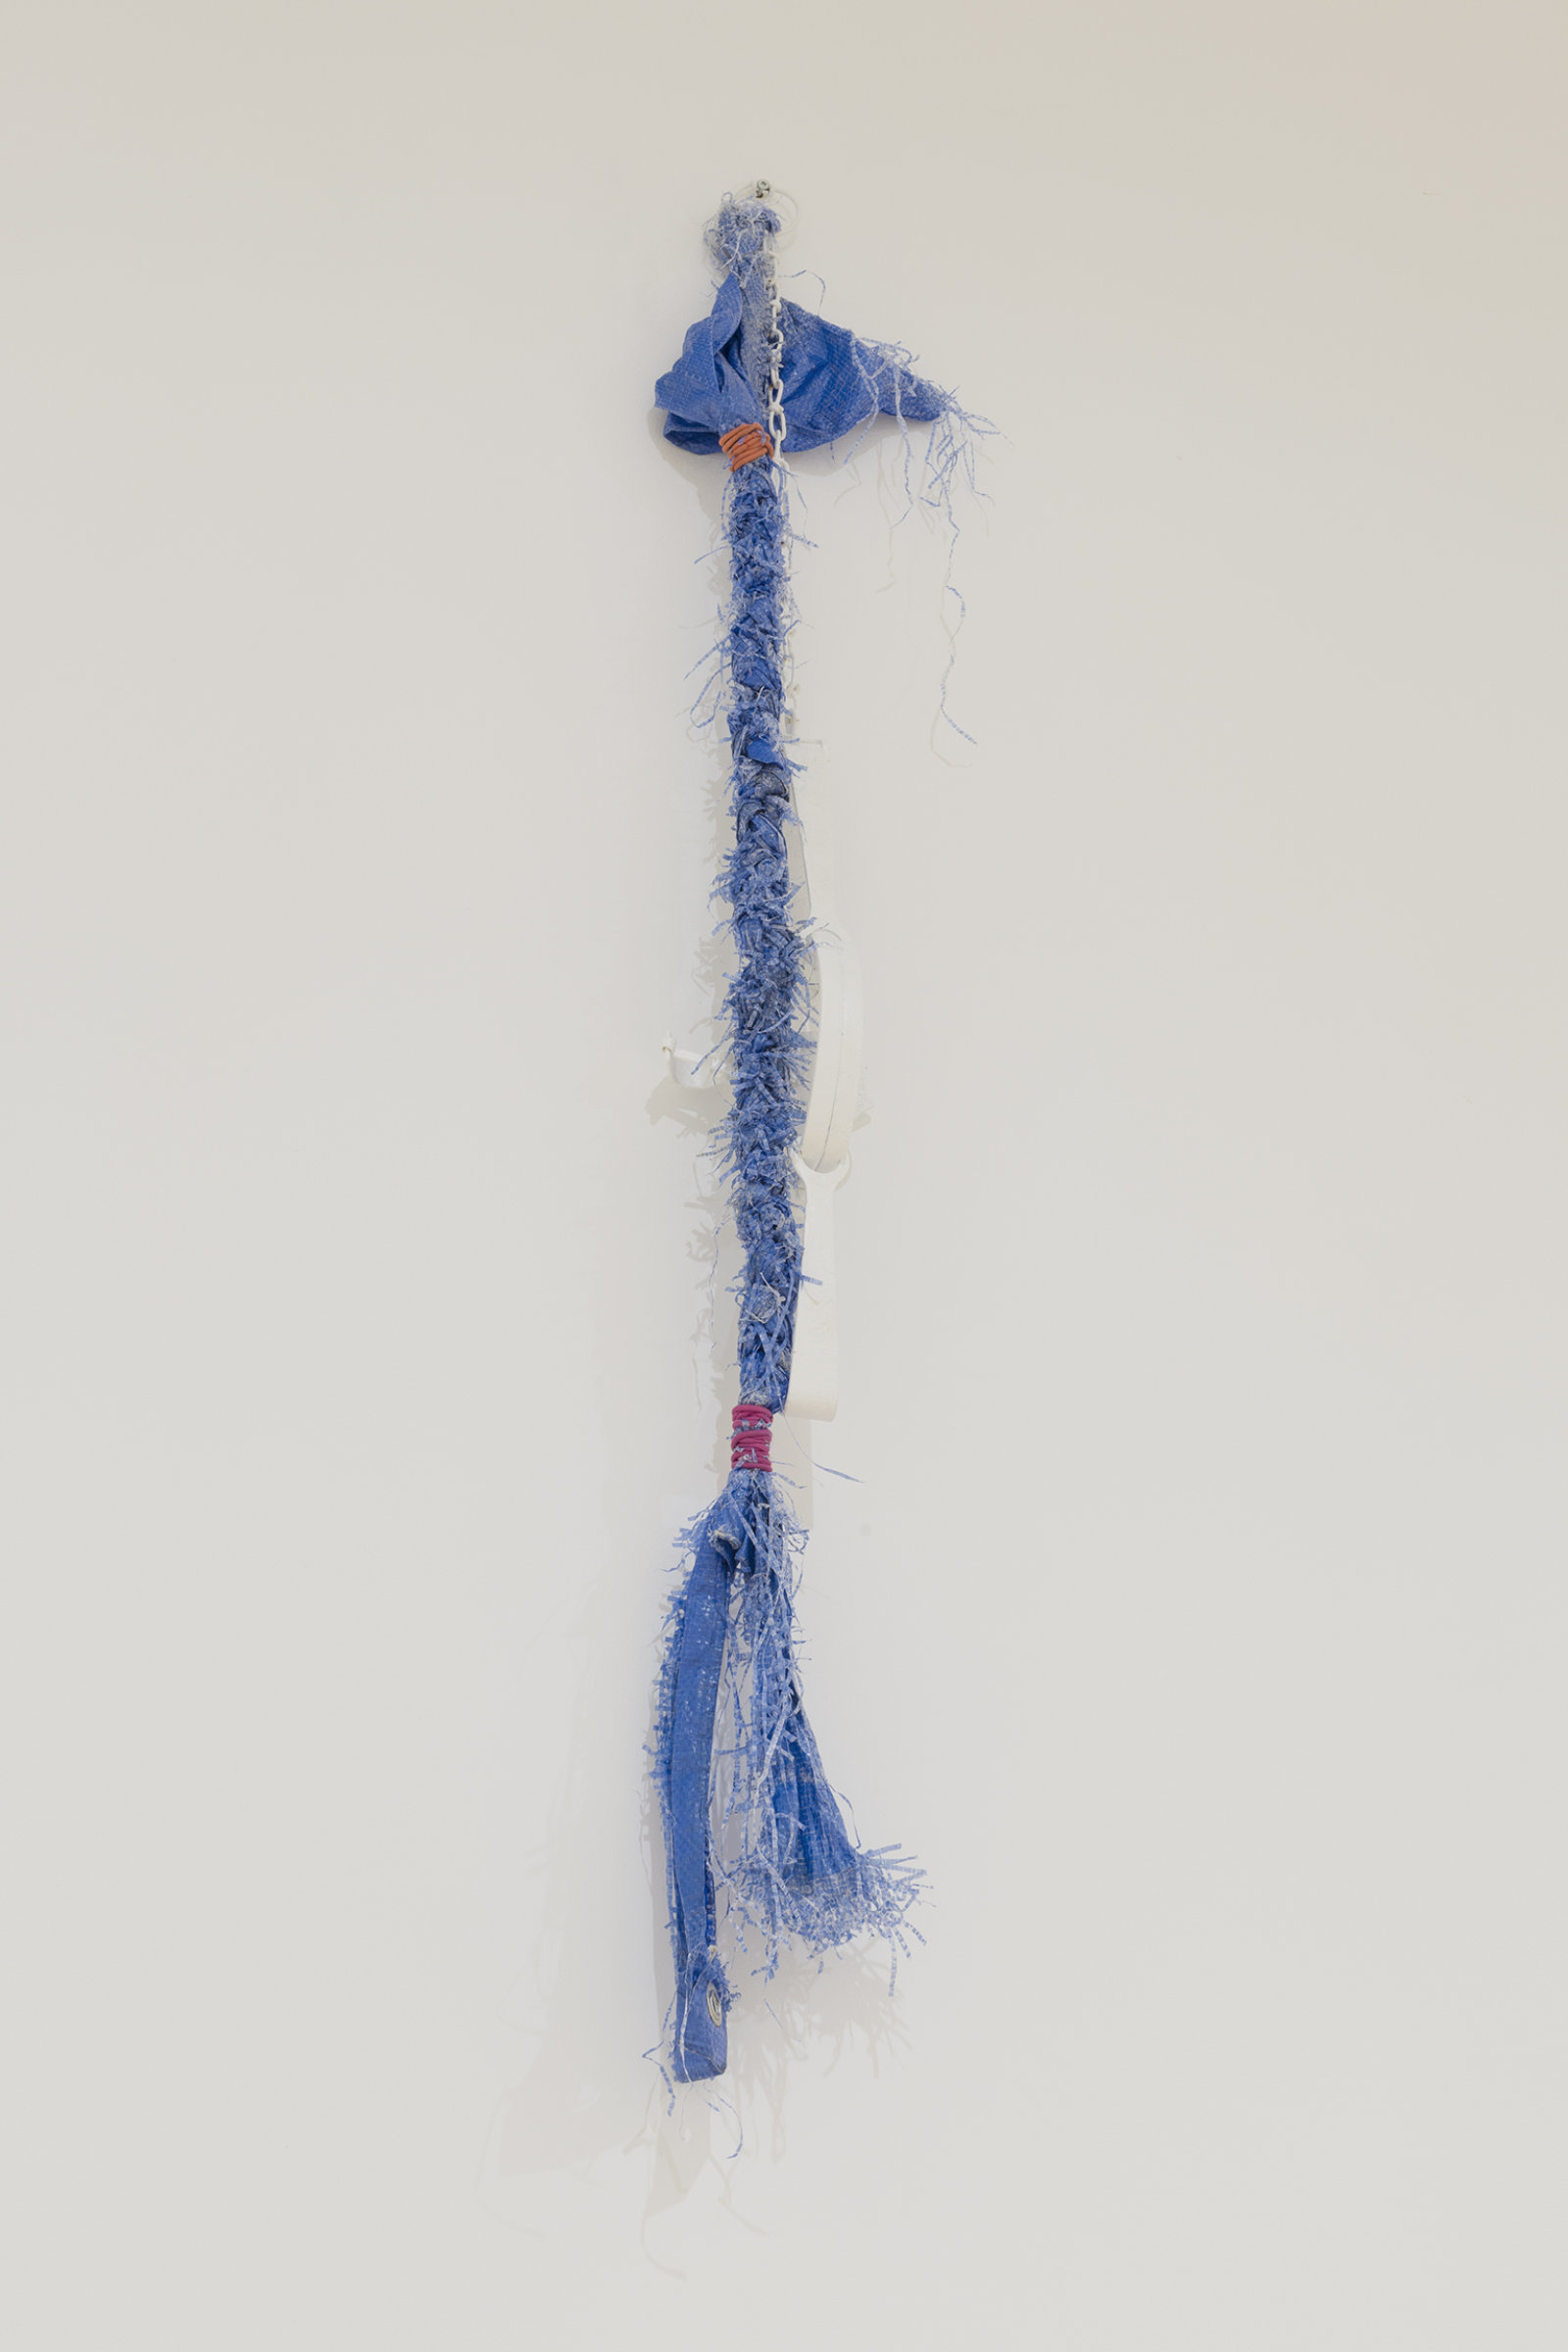 Duane Linklater, blues for the grasses, 2017, tarpulin, elastics, powder coated trap, 53 x 8 x 4 in. (135 x 20 x 10 cm)